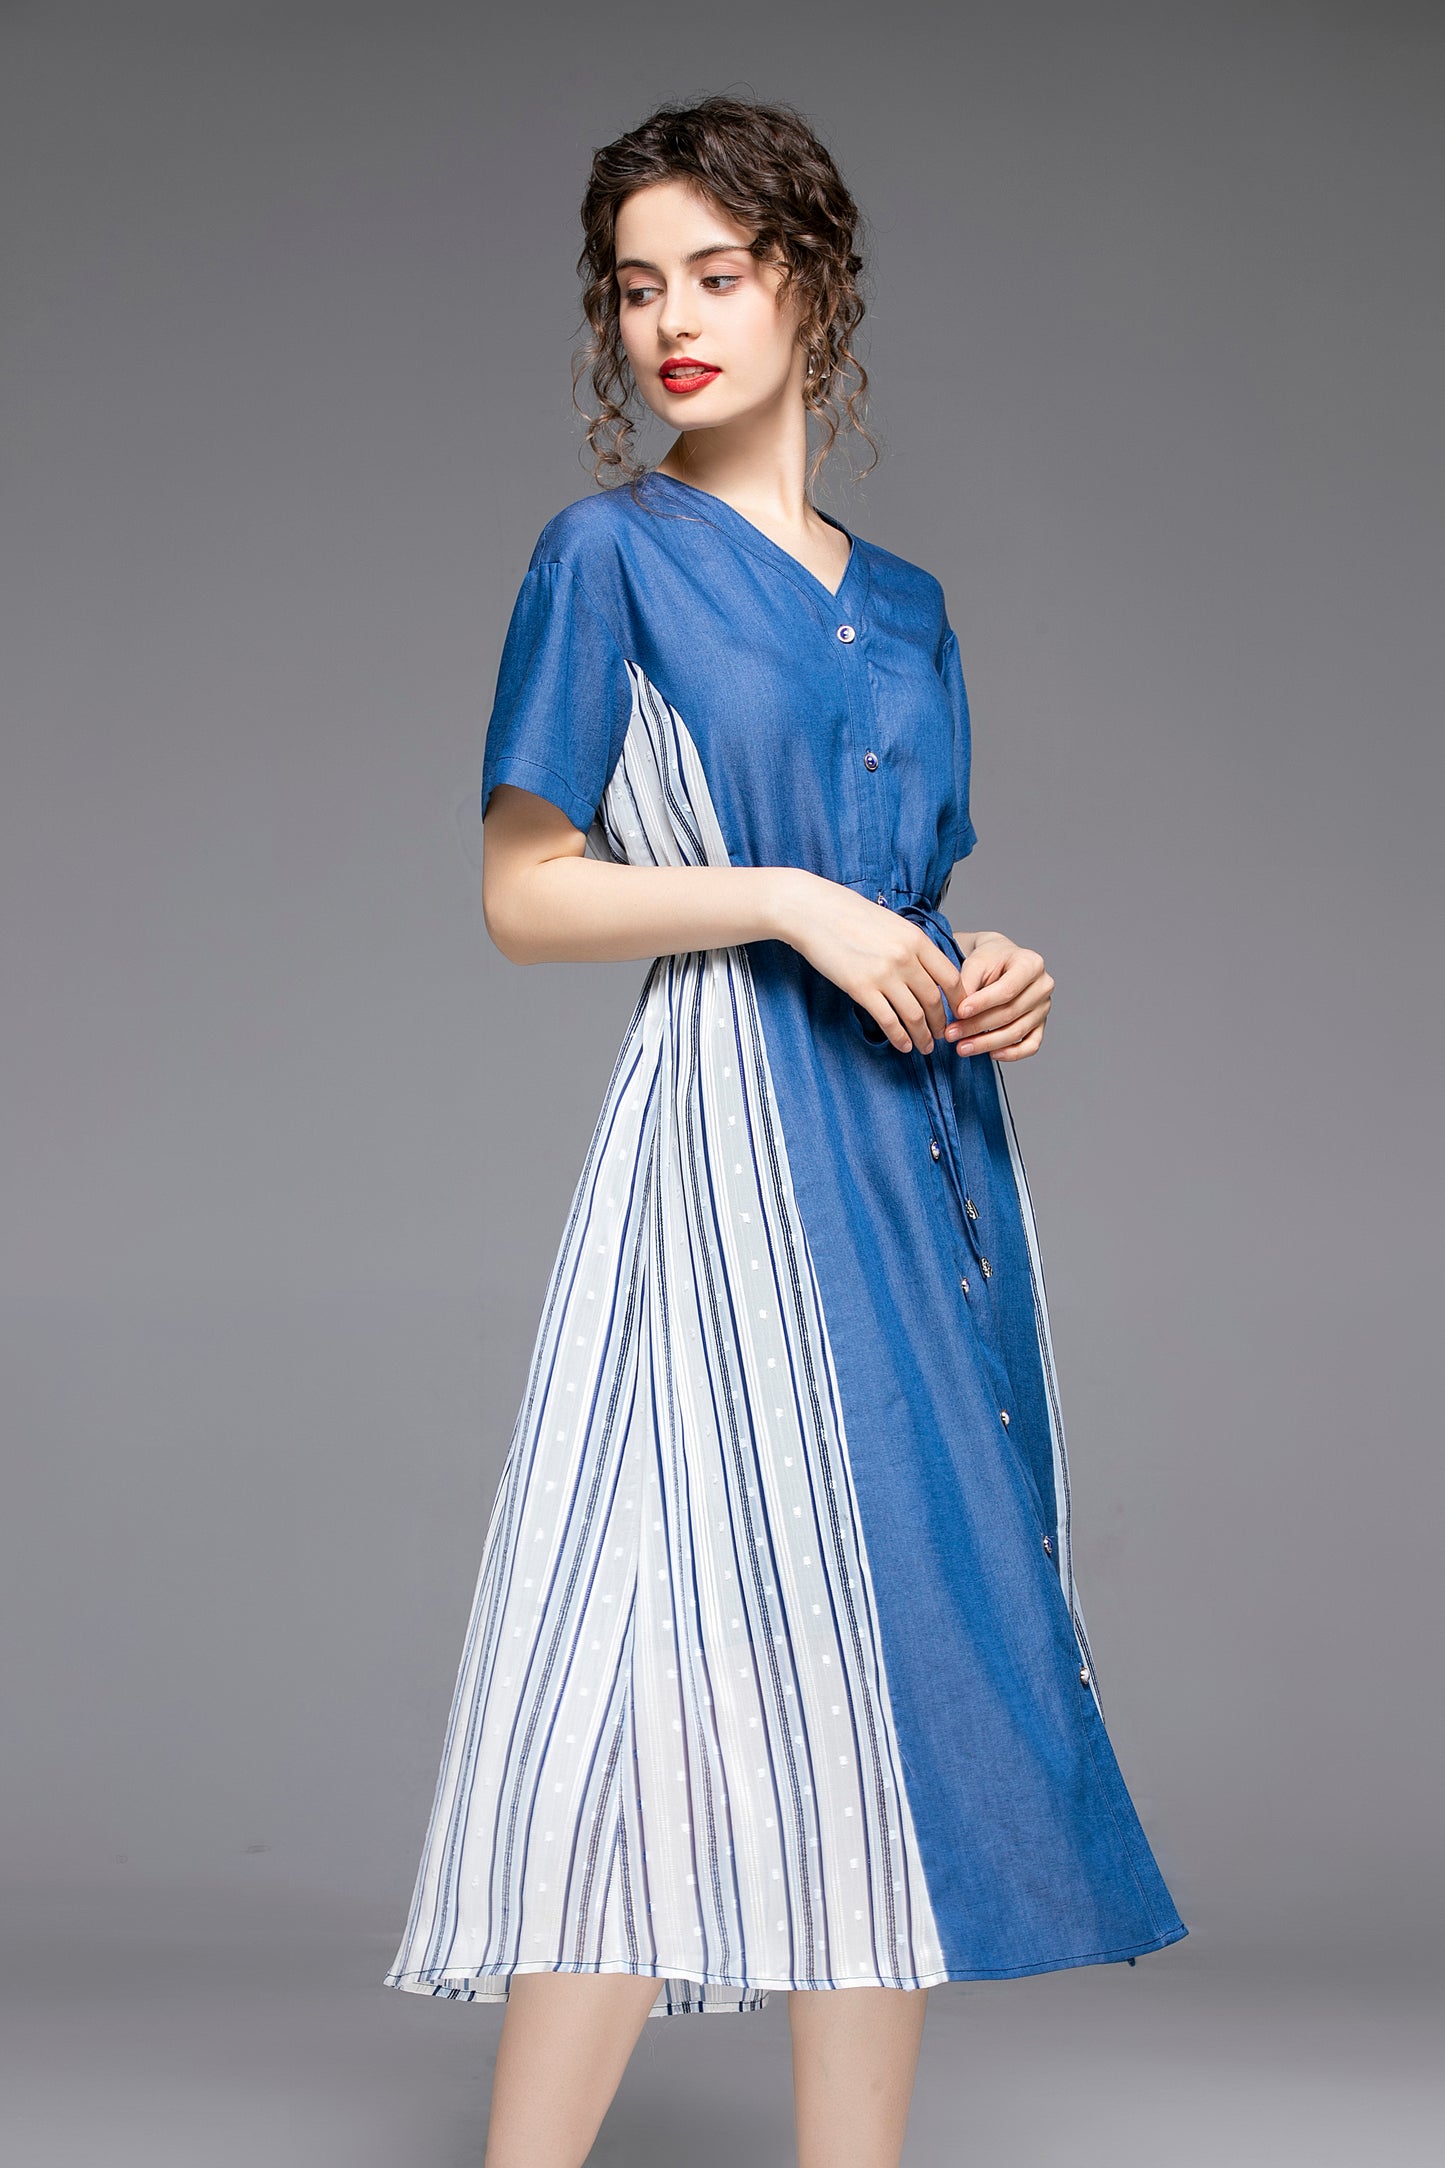 V-neck Front Button Stitching style Blue Denim Dress